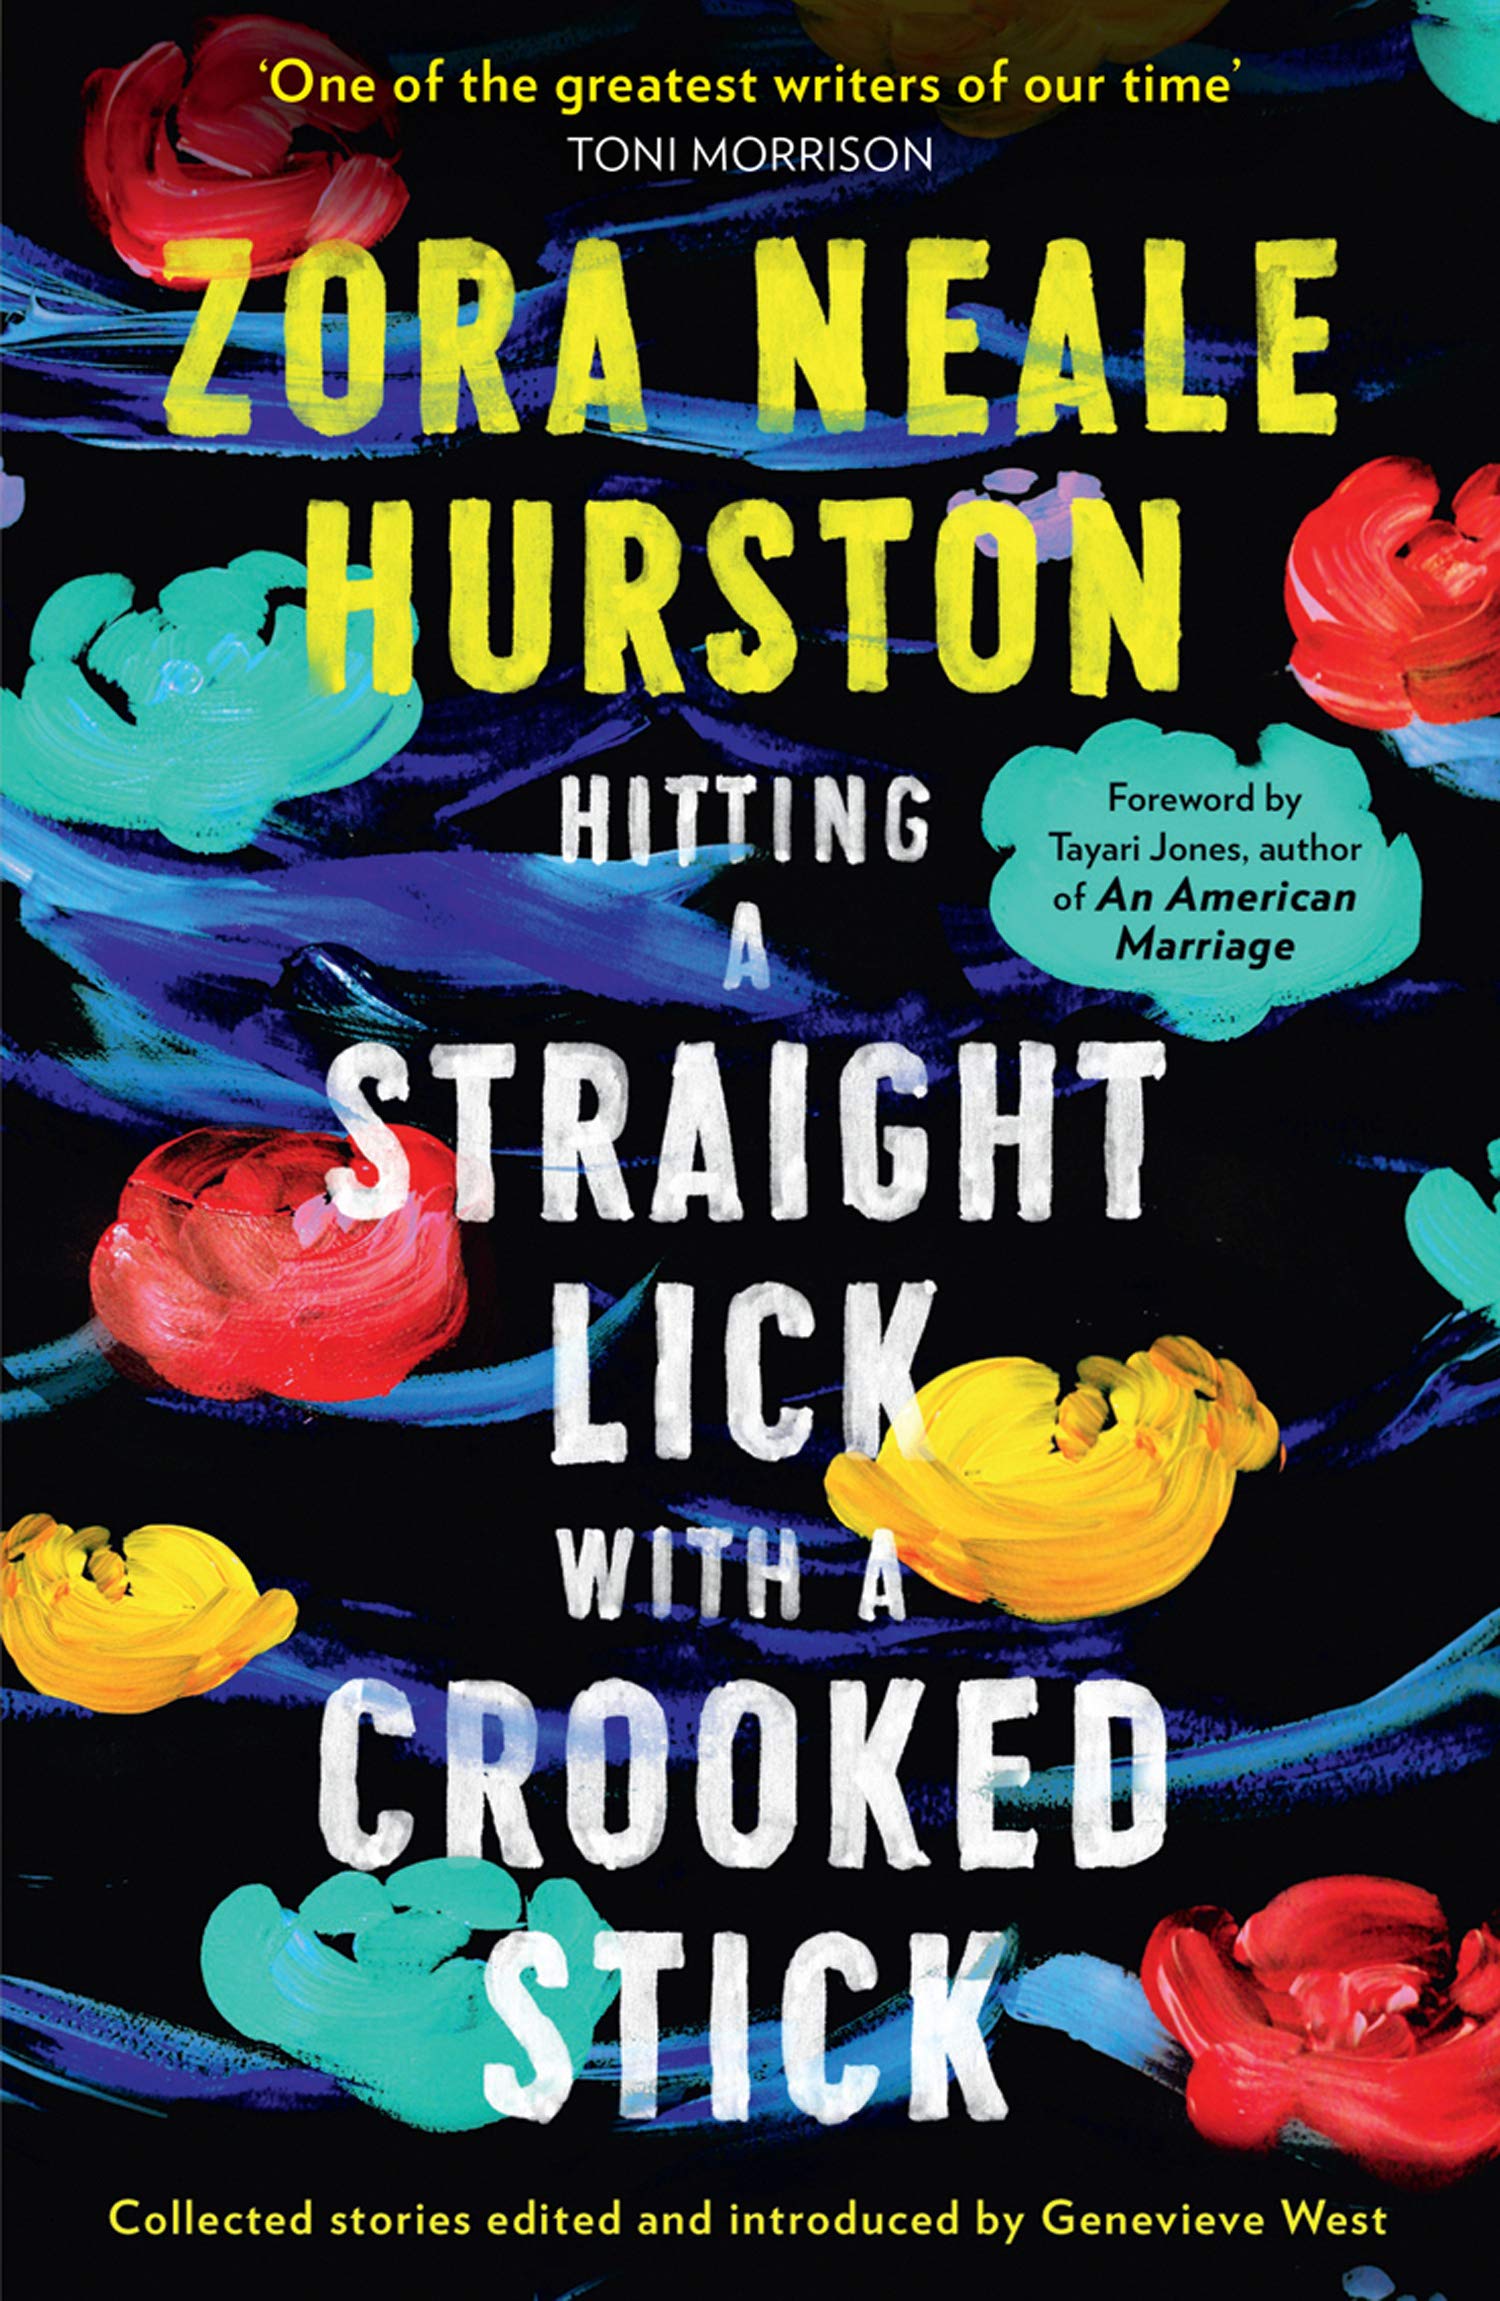 Vezi detalii pentru Hitting a Straight Lick with a Crooked Stick | Zora Neale Hurston